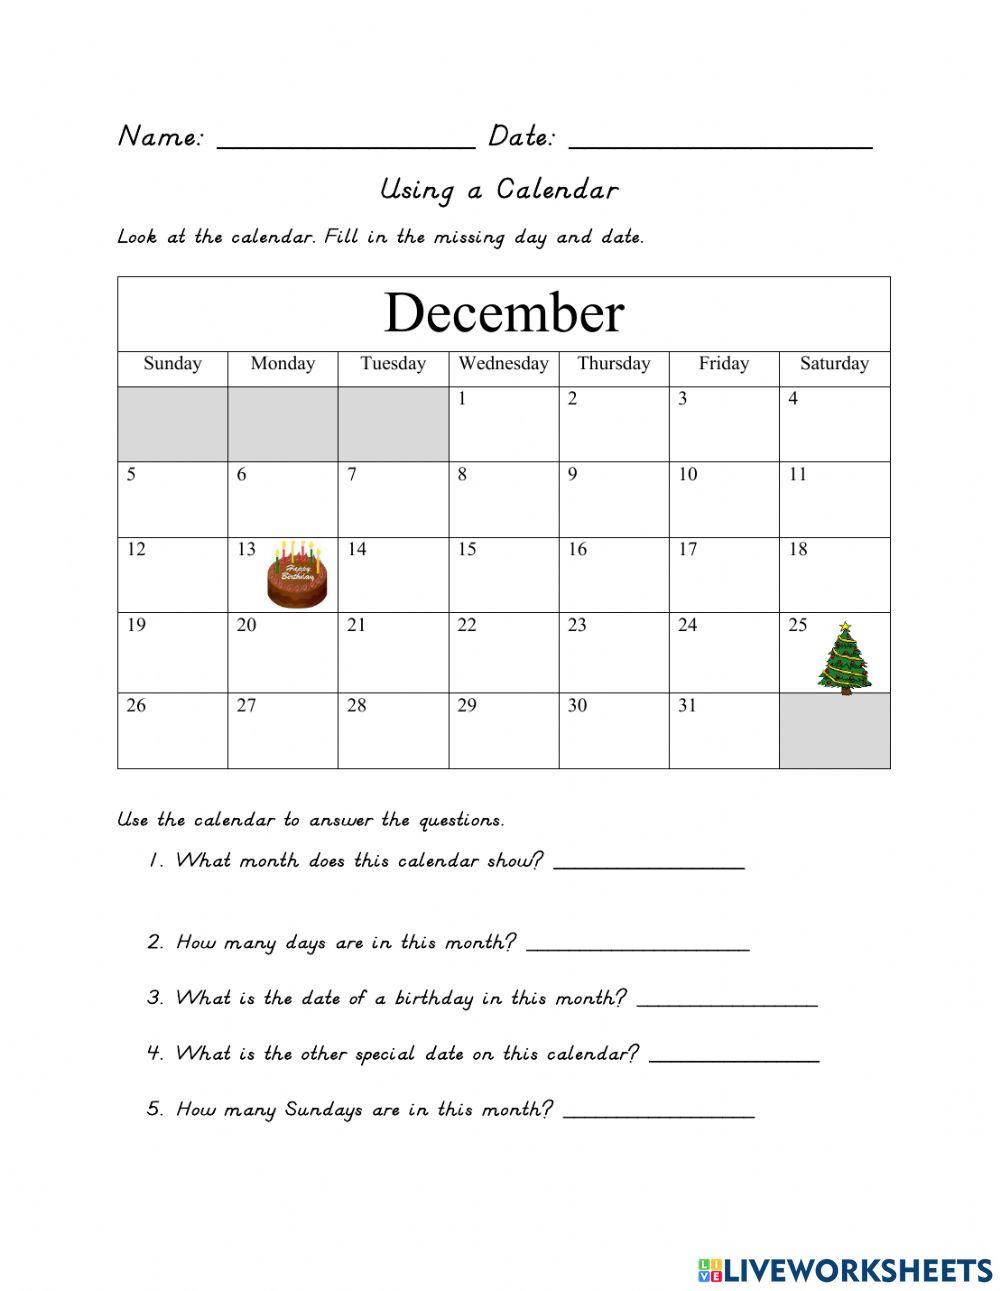 Using a Calendar 2